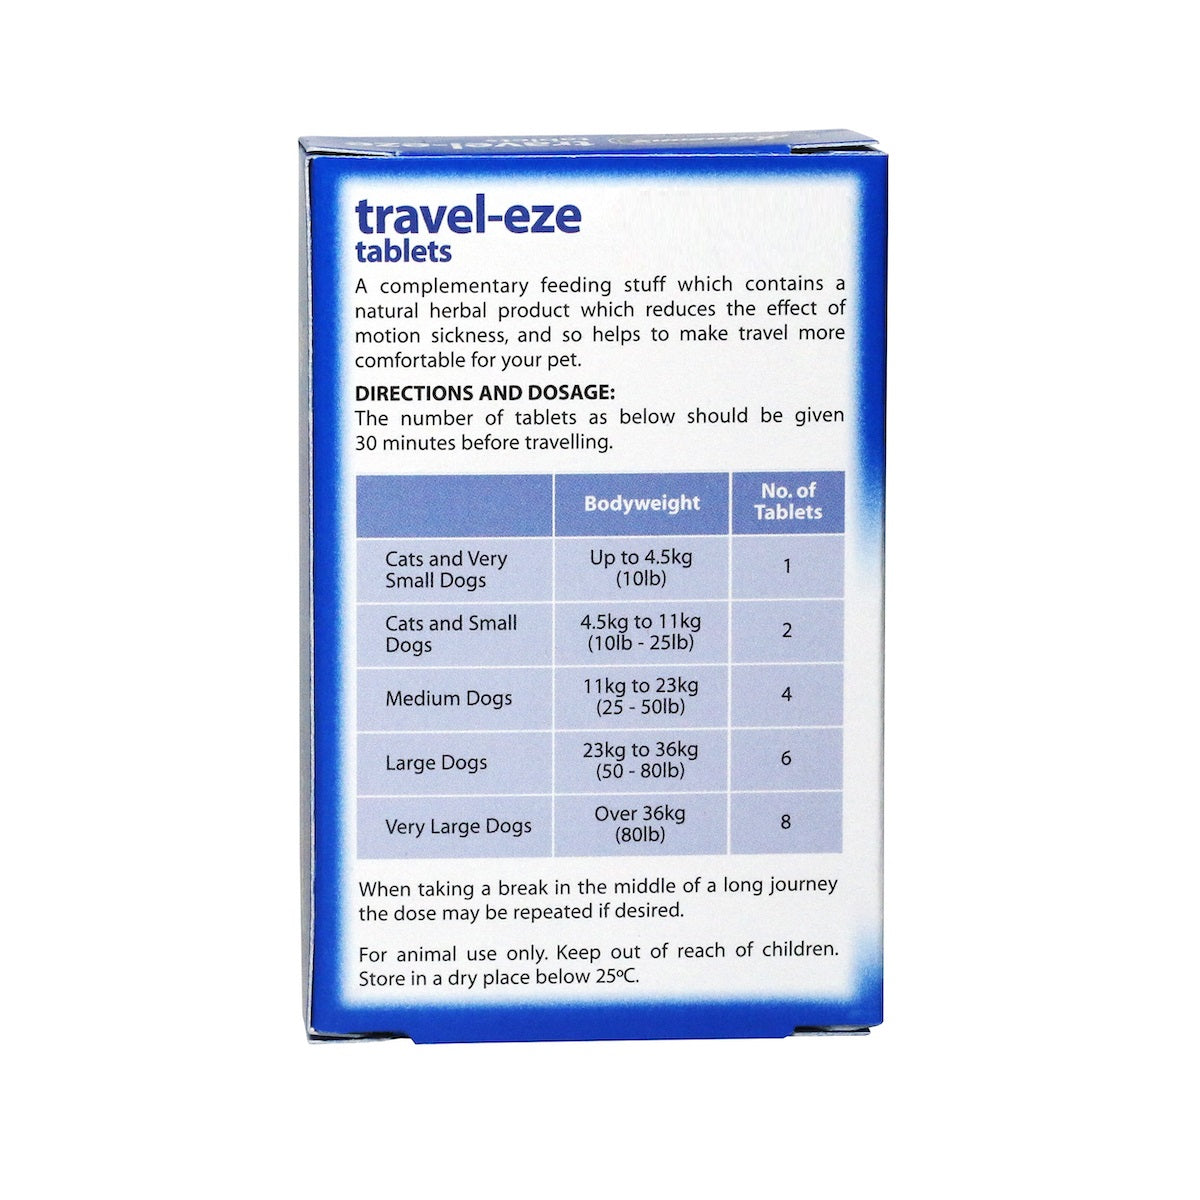 Johnson's - Travel-eze Tablets (24pk)